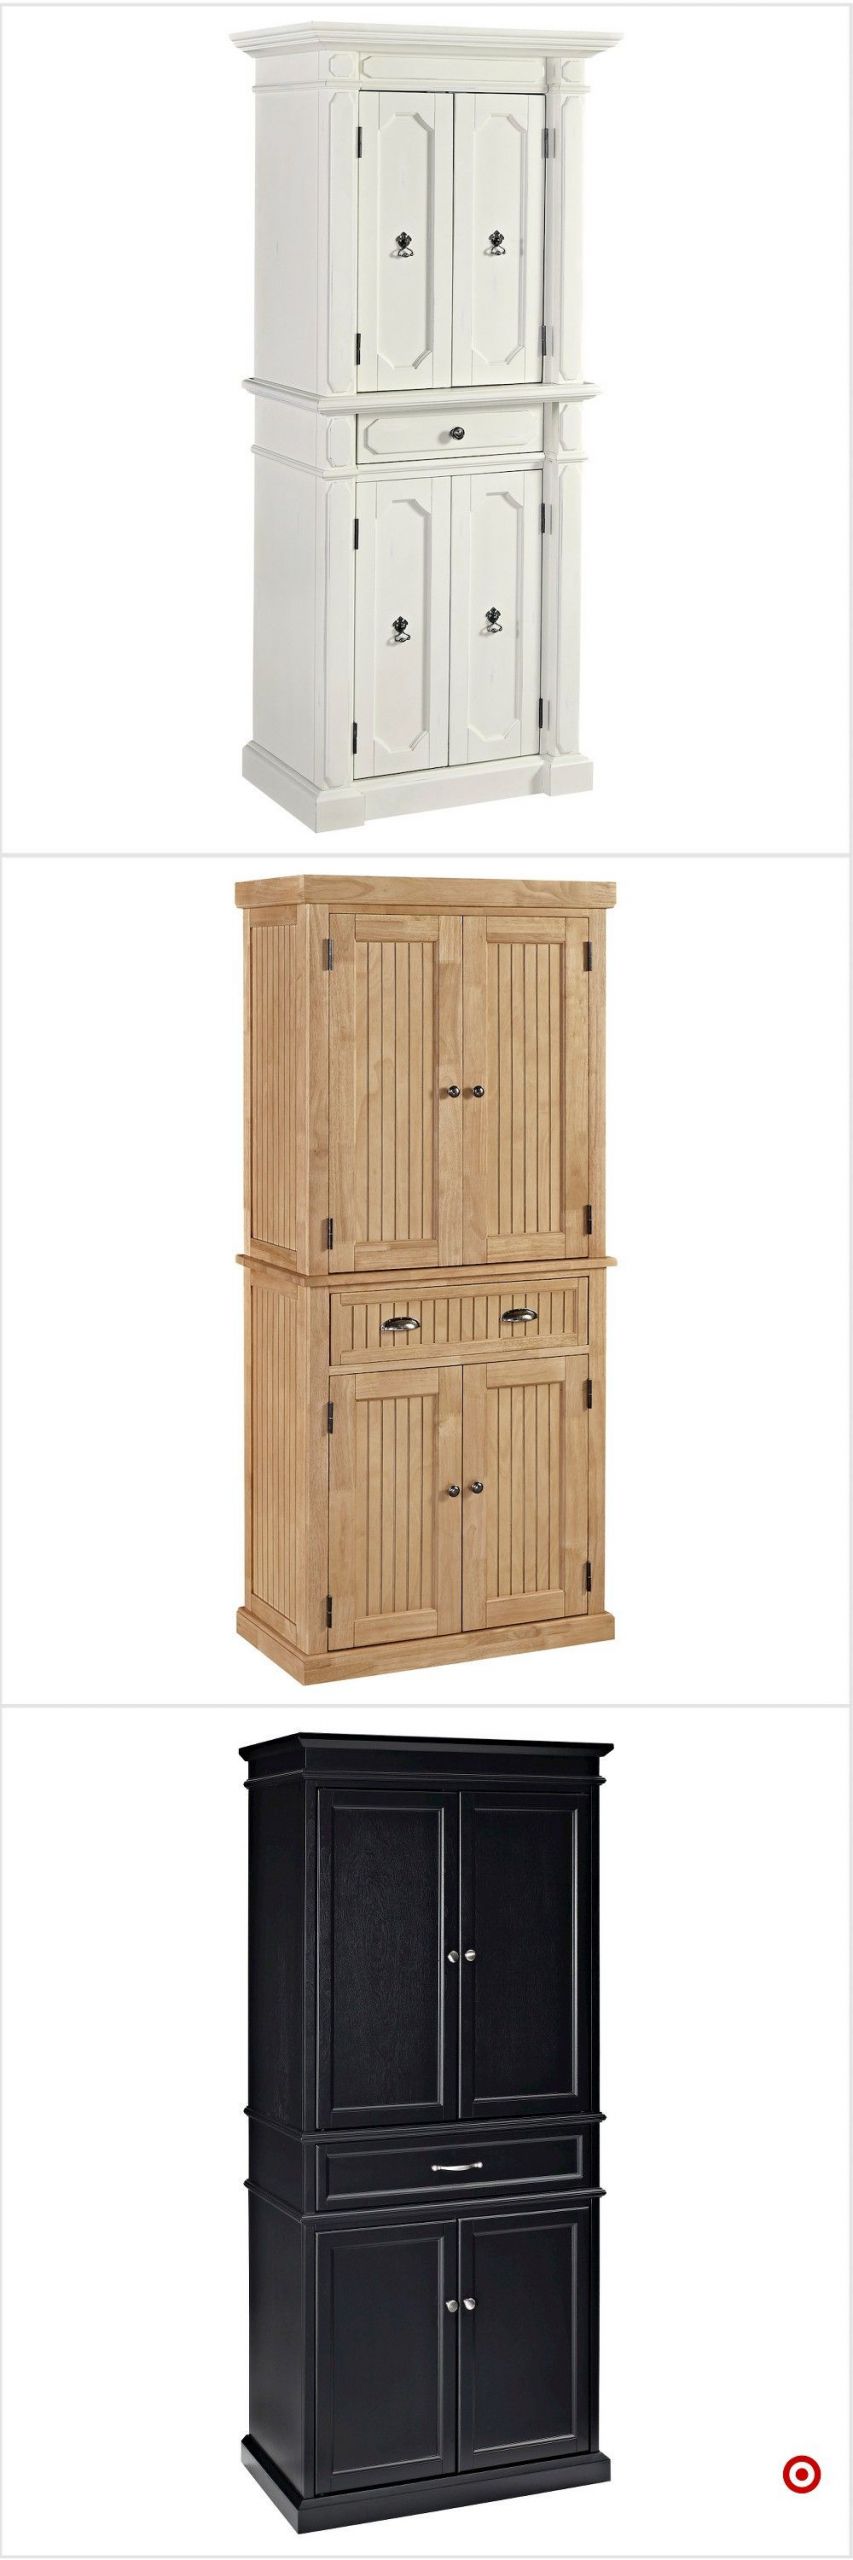 Kitchen Storage Cabinet Target
 Shop Tar for kitchen storage pantry you will love at